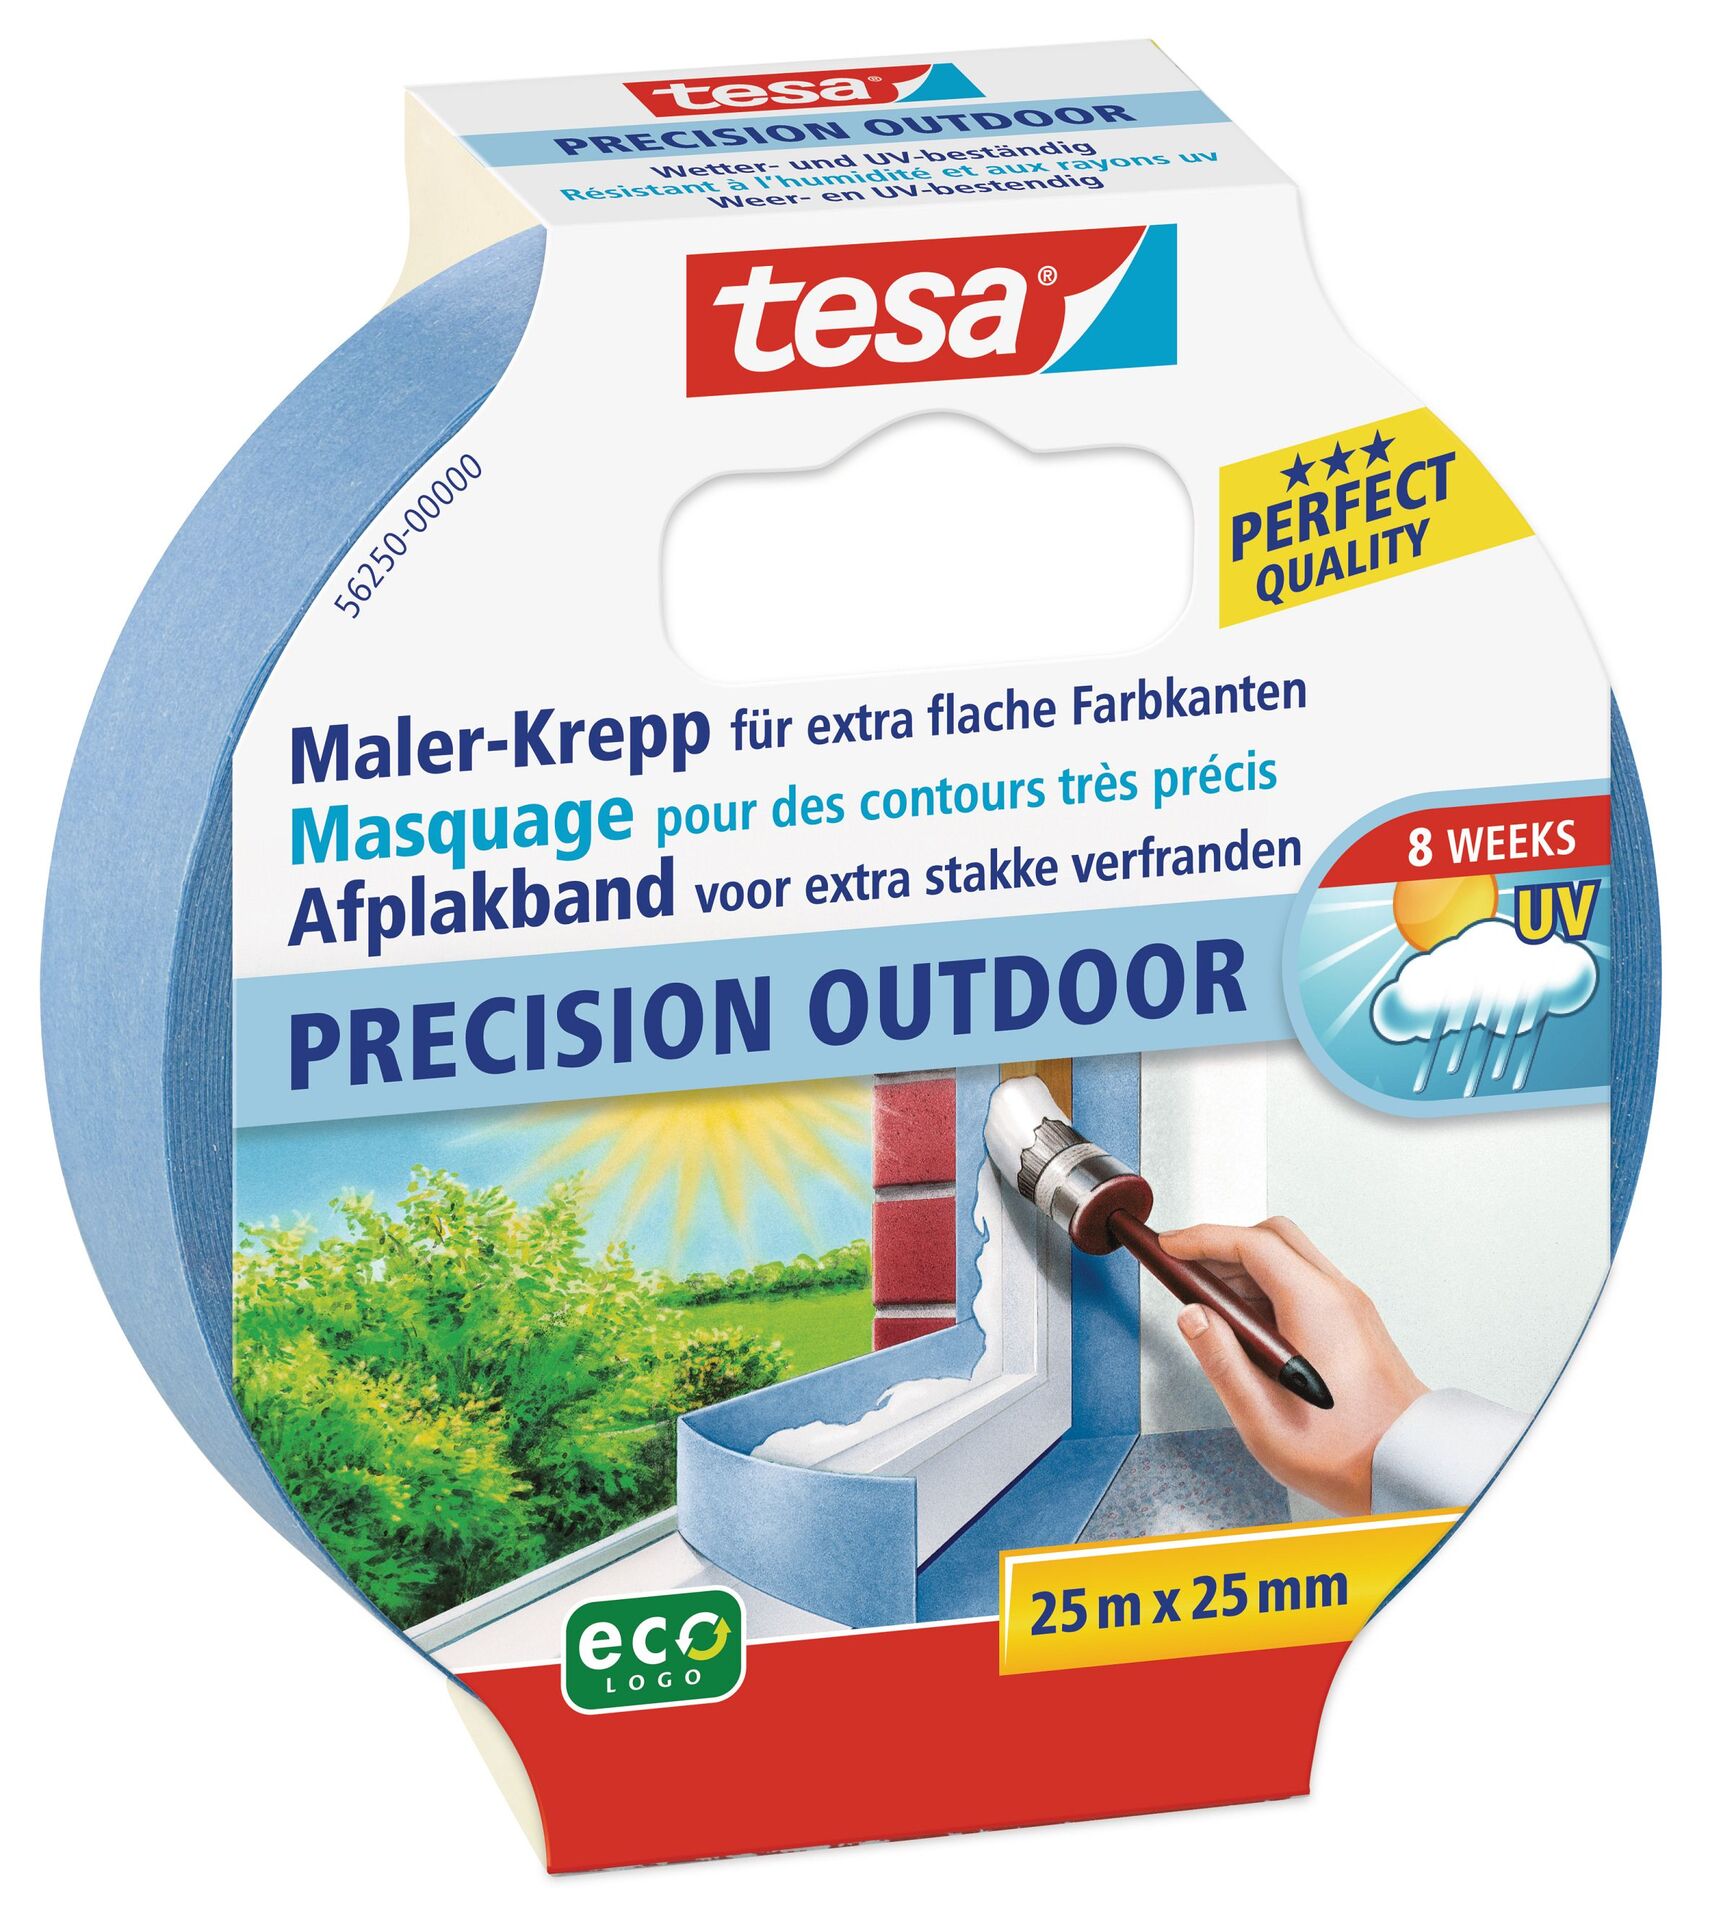 TESA SE Tesa Maler-Krepp Precision Outdoor